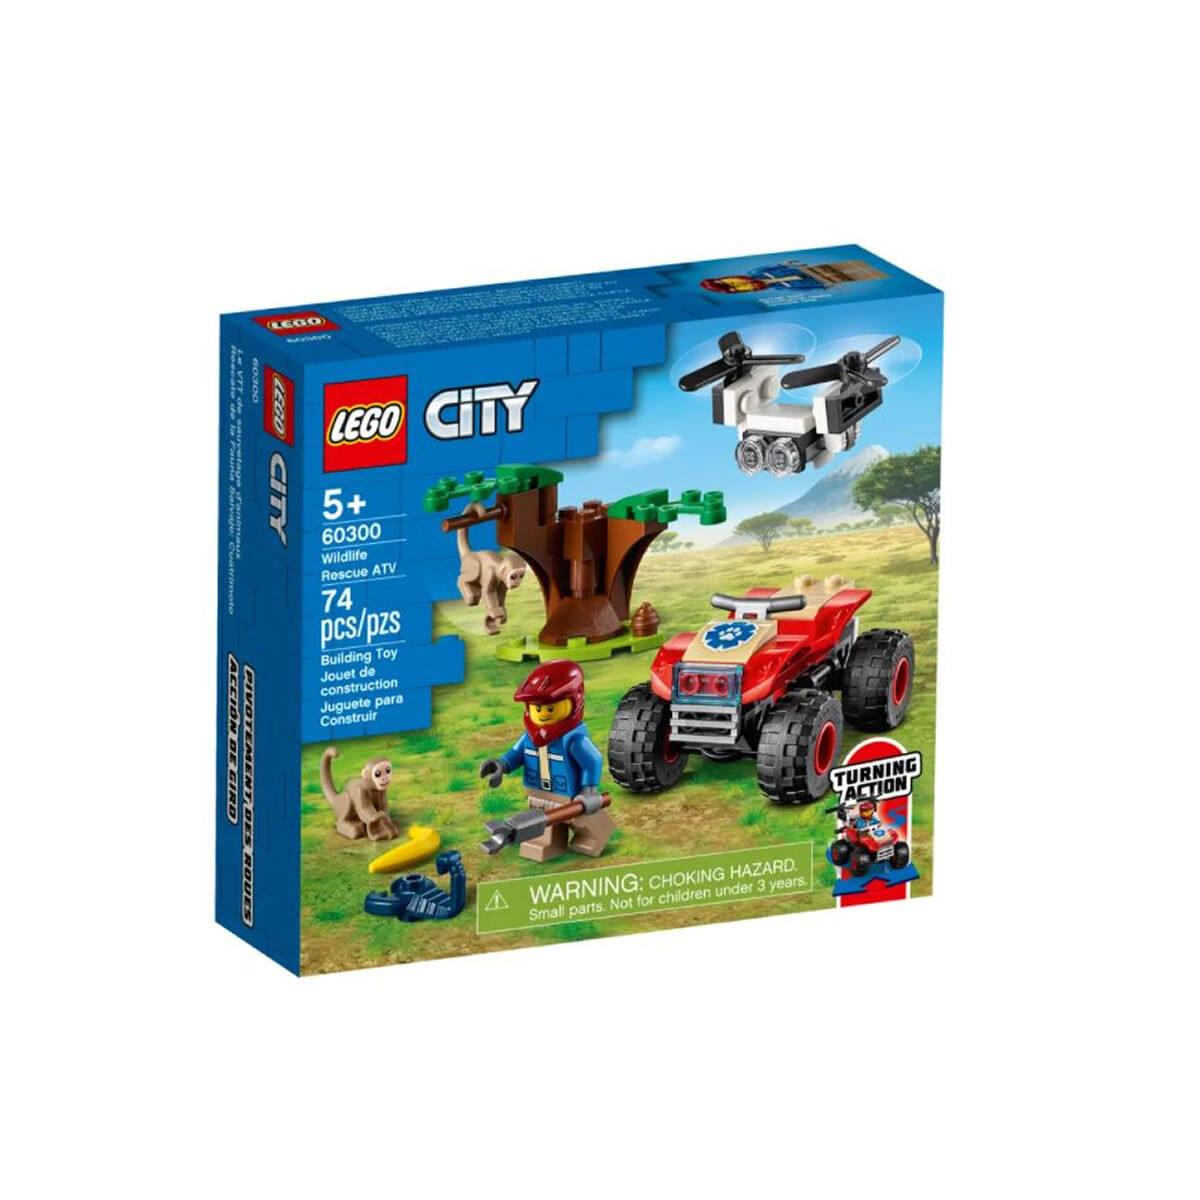 LEGO CITY Vida Salvaje 74 Pcs 